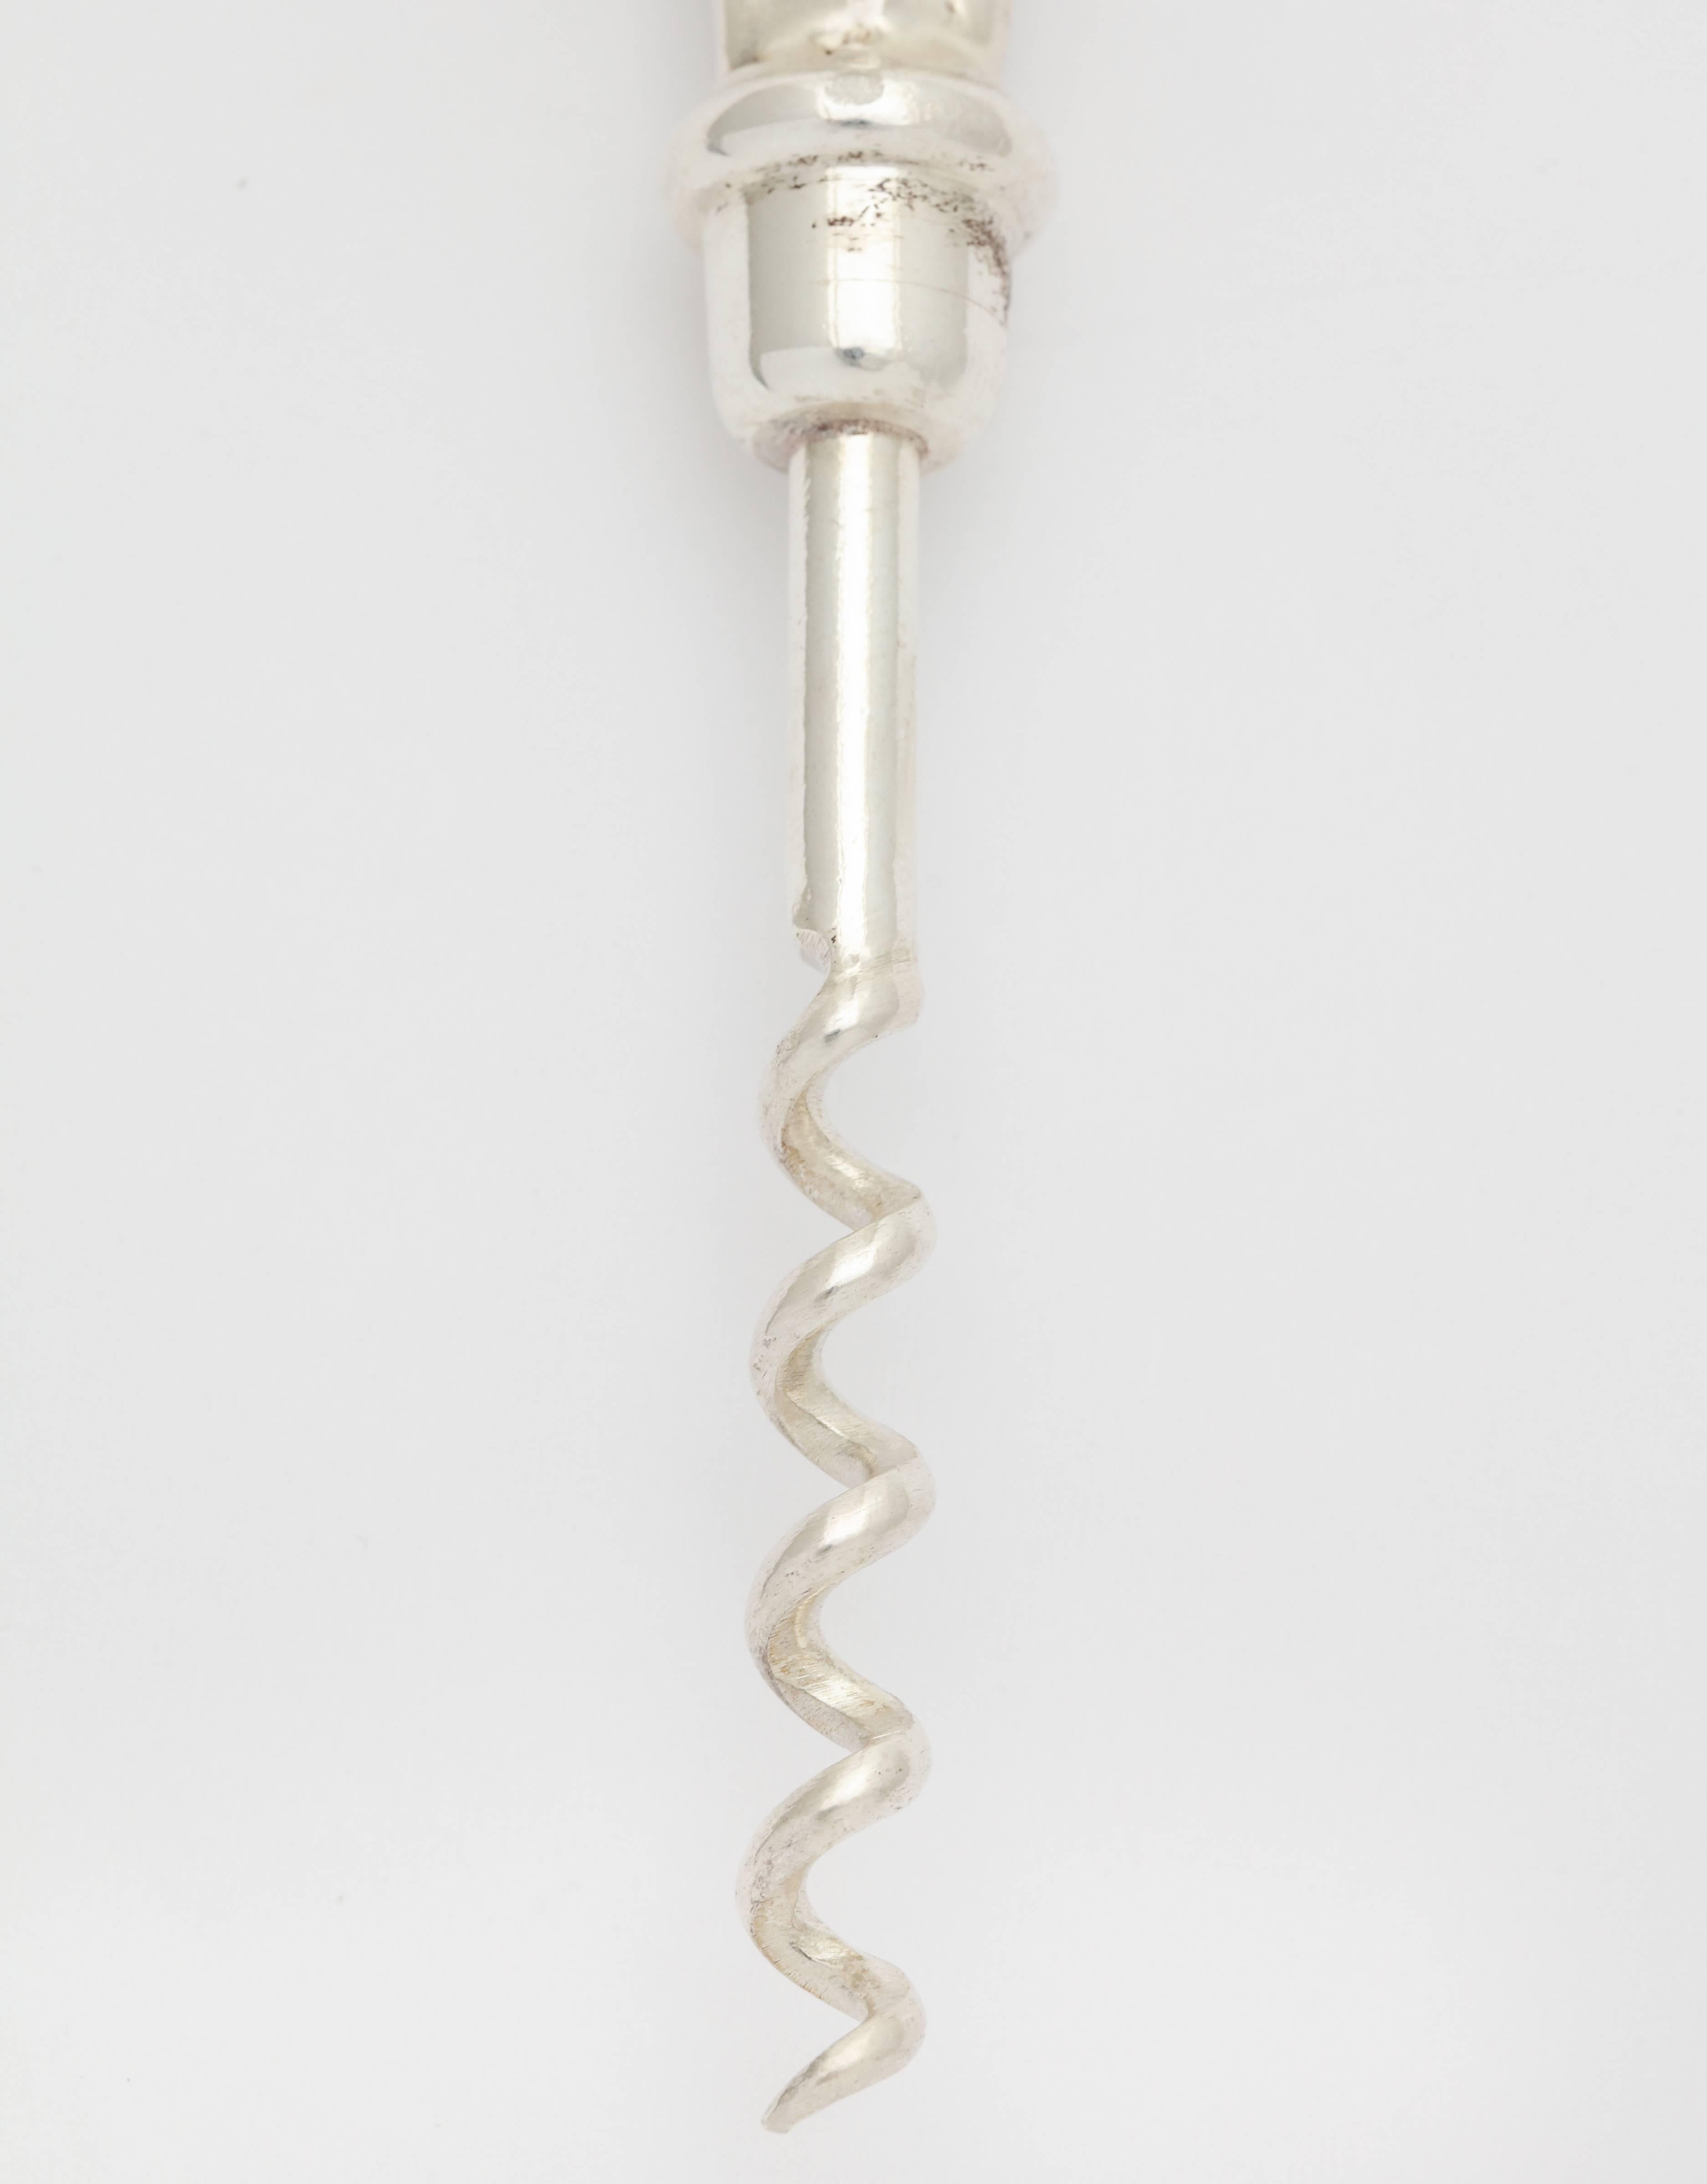 American Classical Hermes Horse Head Bottle Opener Corkscrew